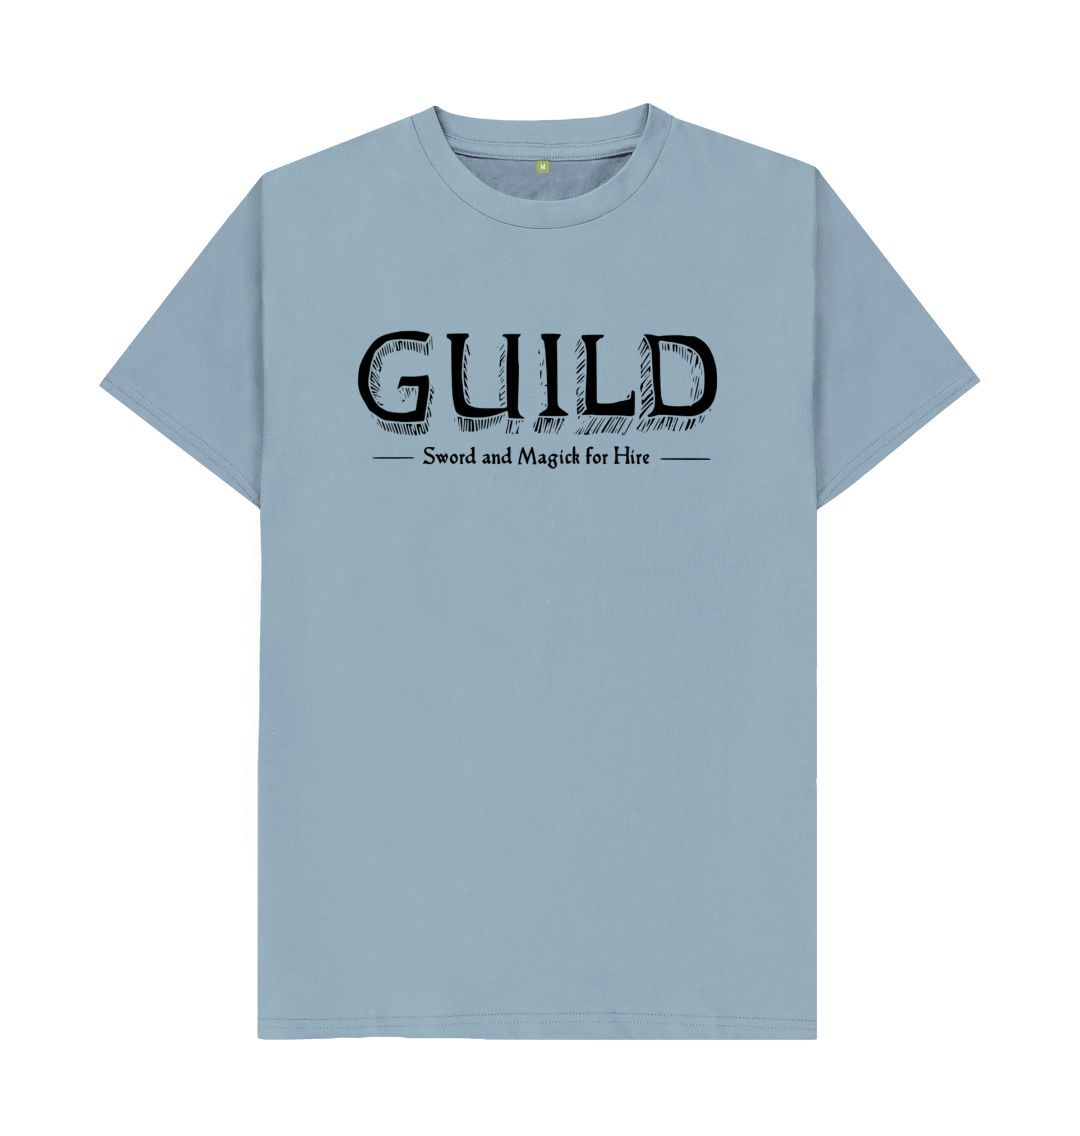 Stone Blue GUILD Logo Shirt